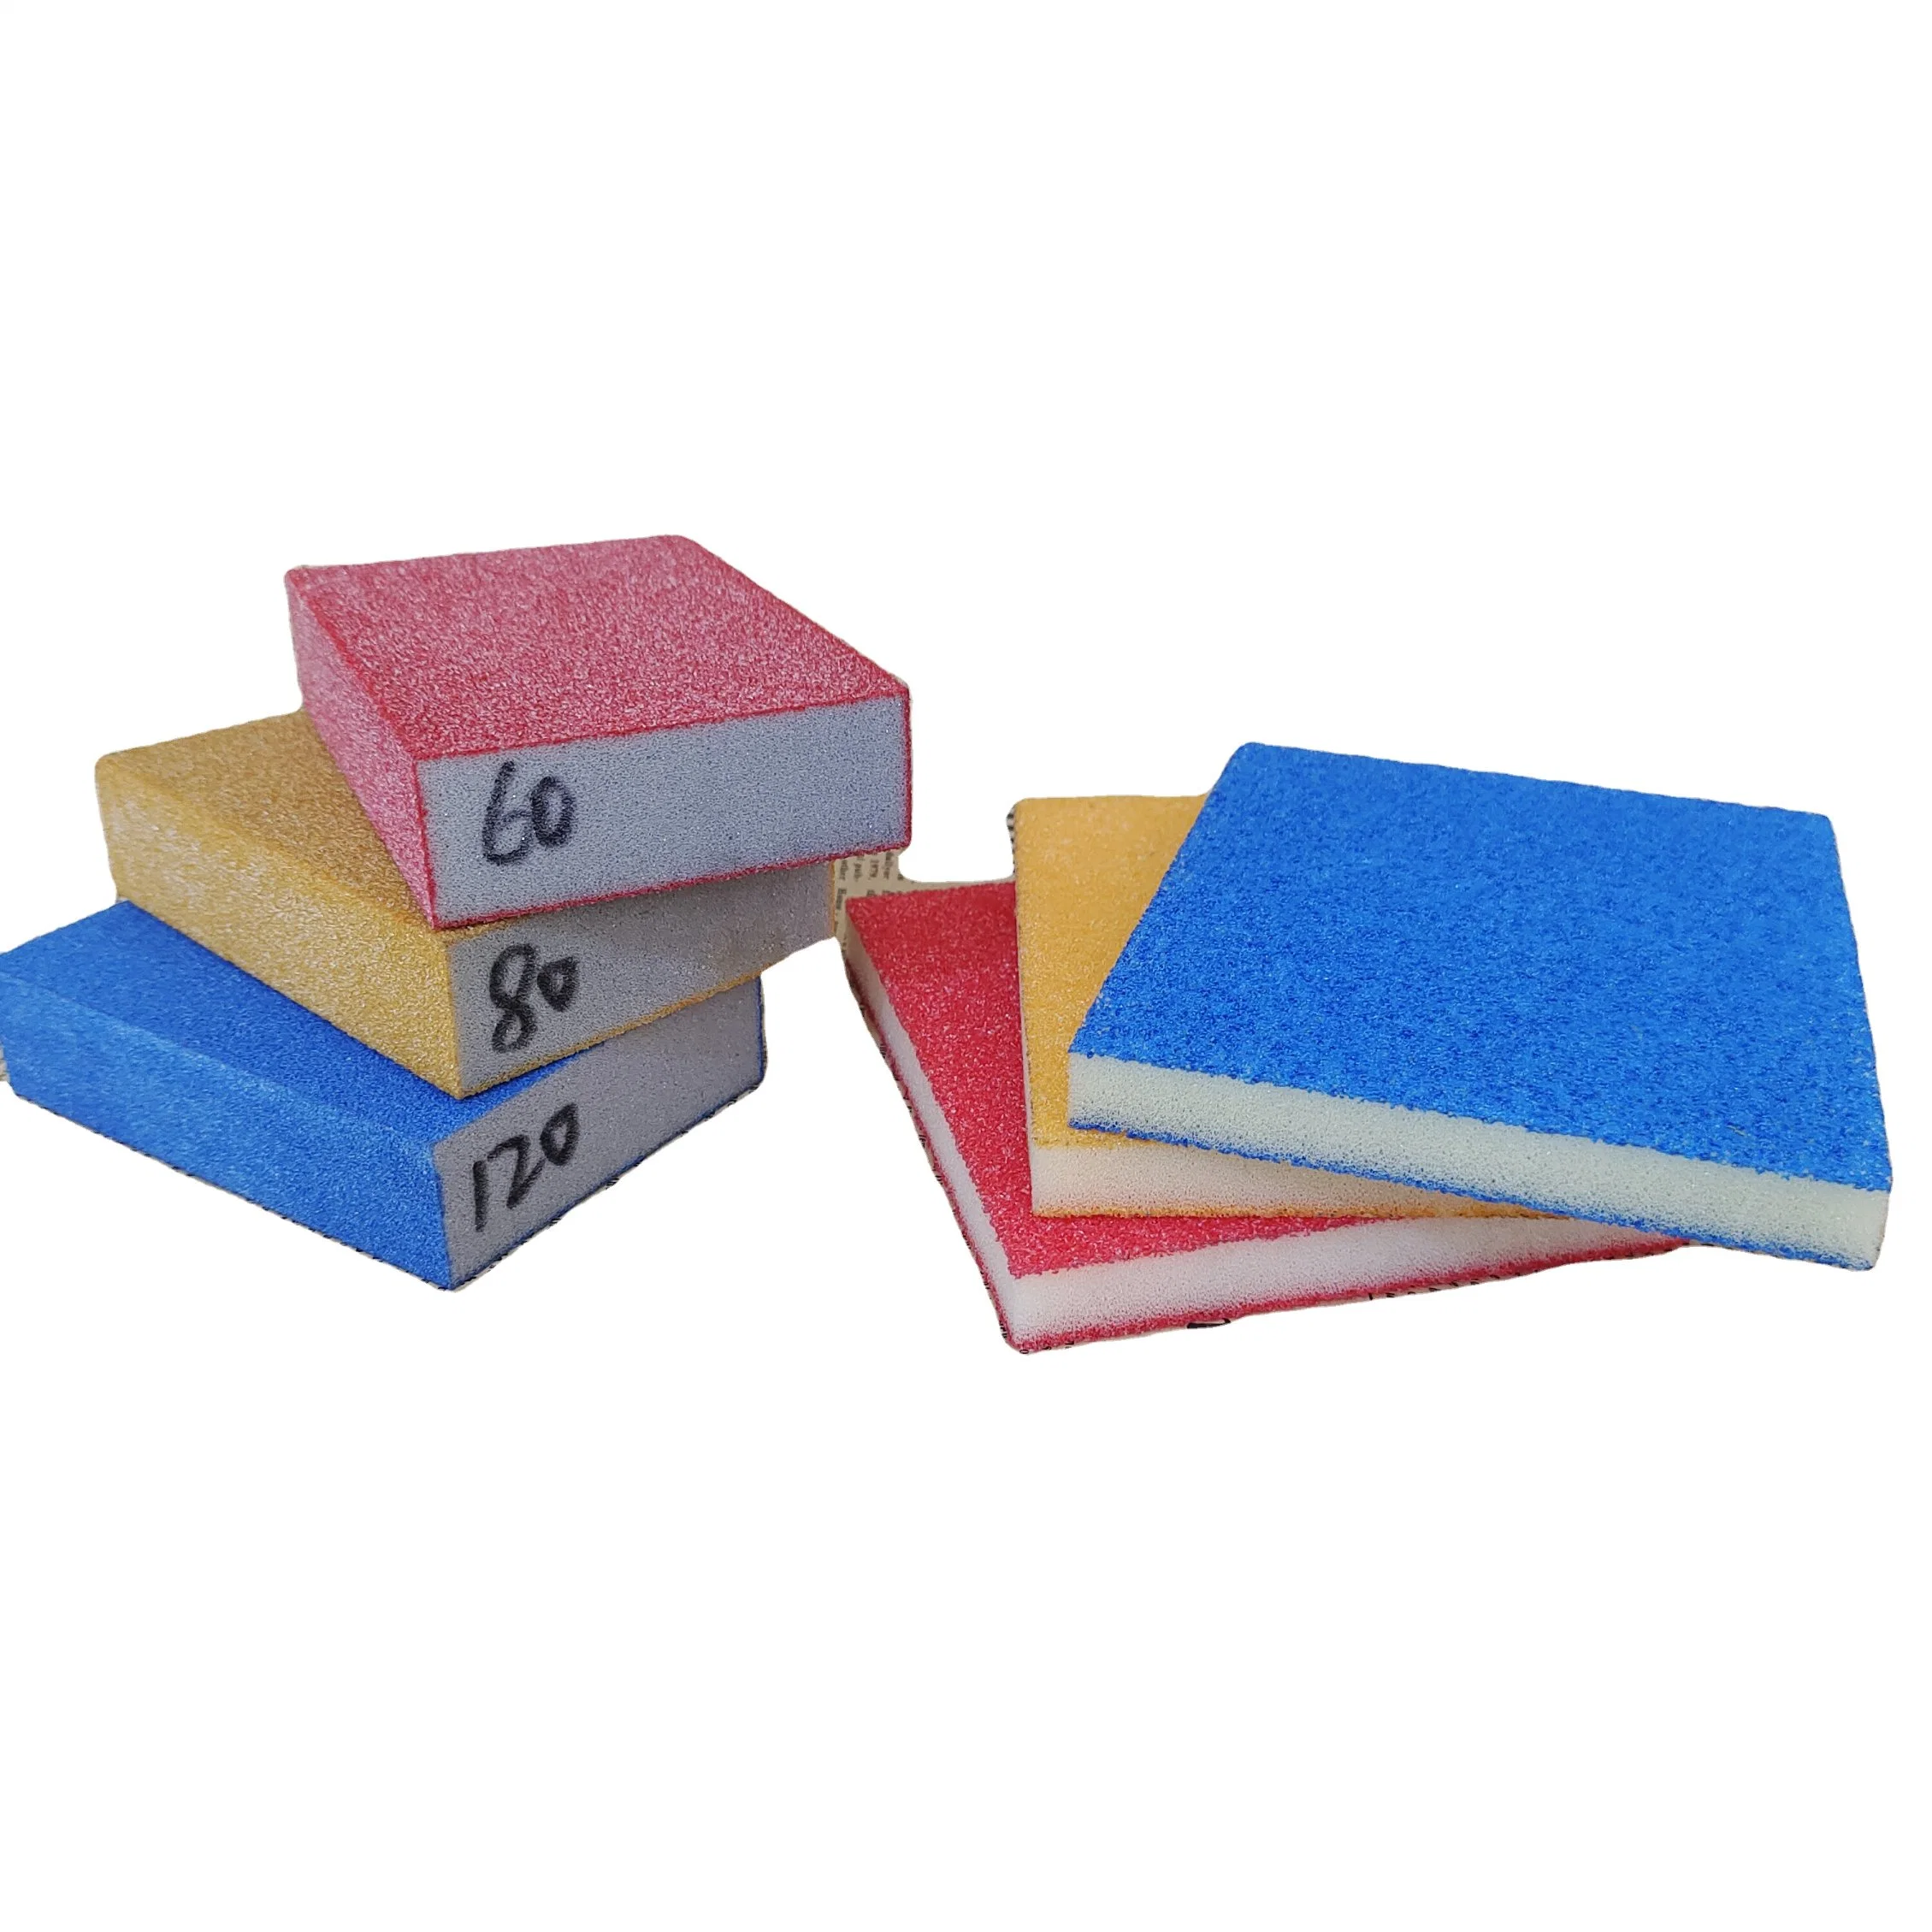 Cilorful Sand Sponges 100X70X25mm Sanding Sponge Block 3.9"X2.7"X1" Abrasive Tools Foam Rubber Sanding Block